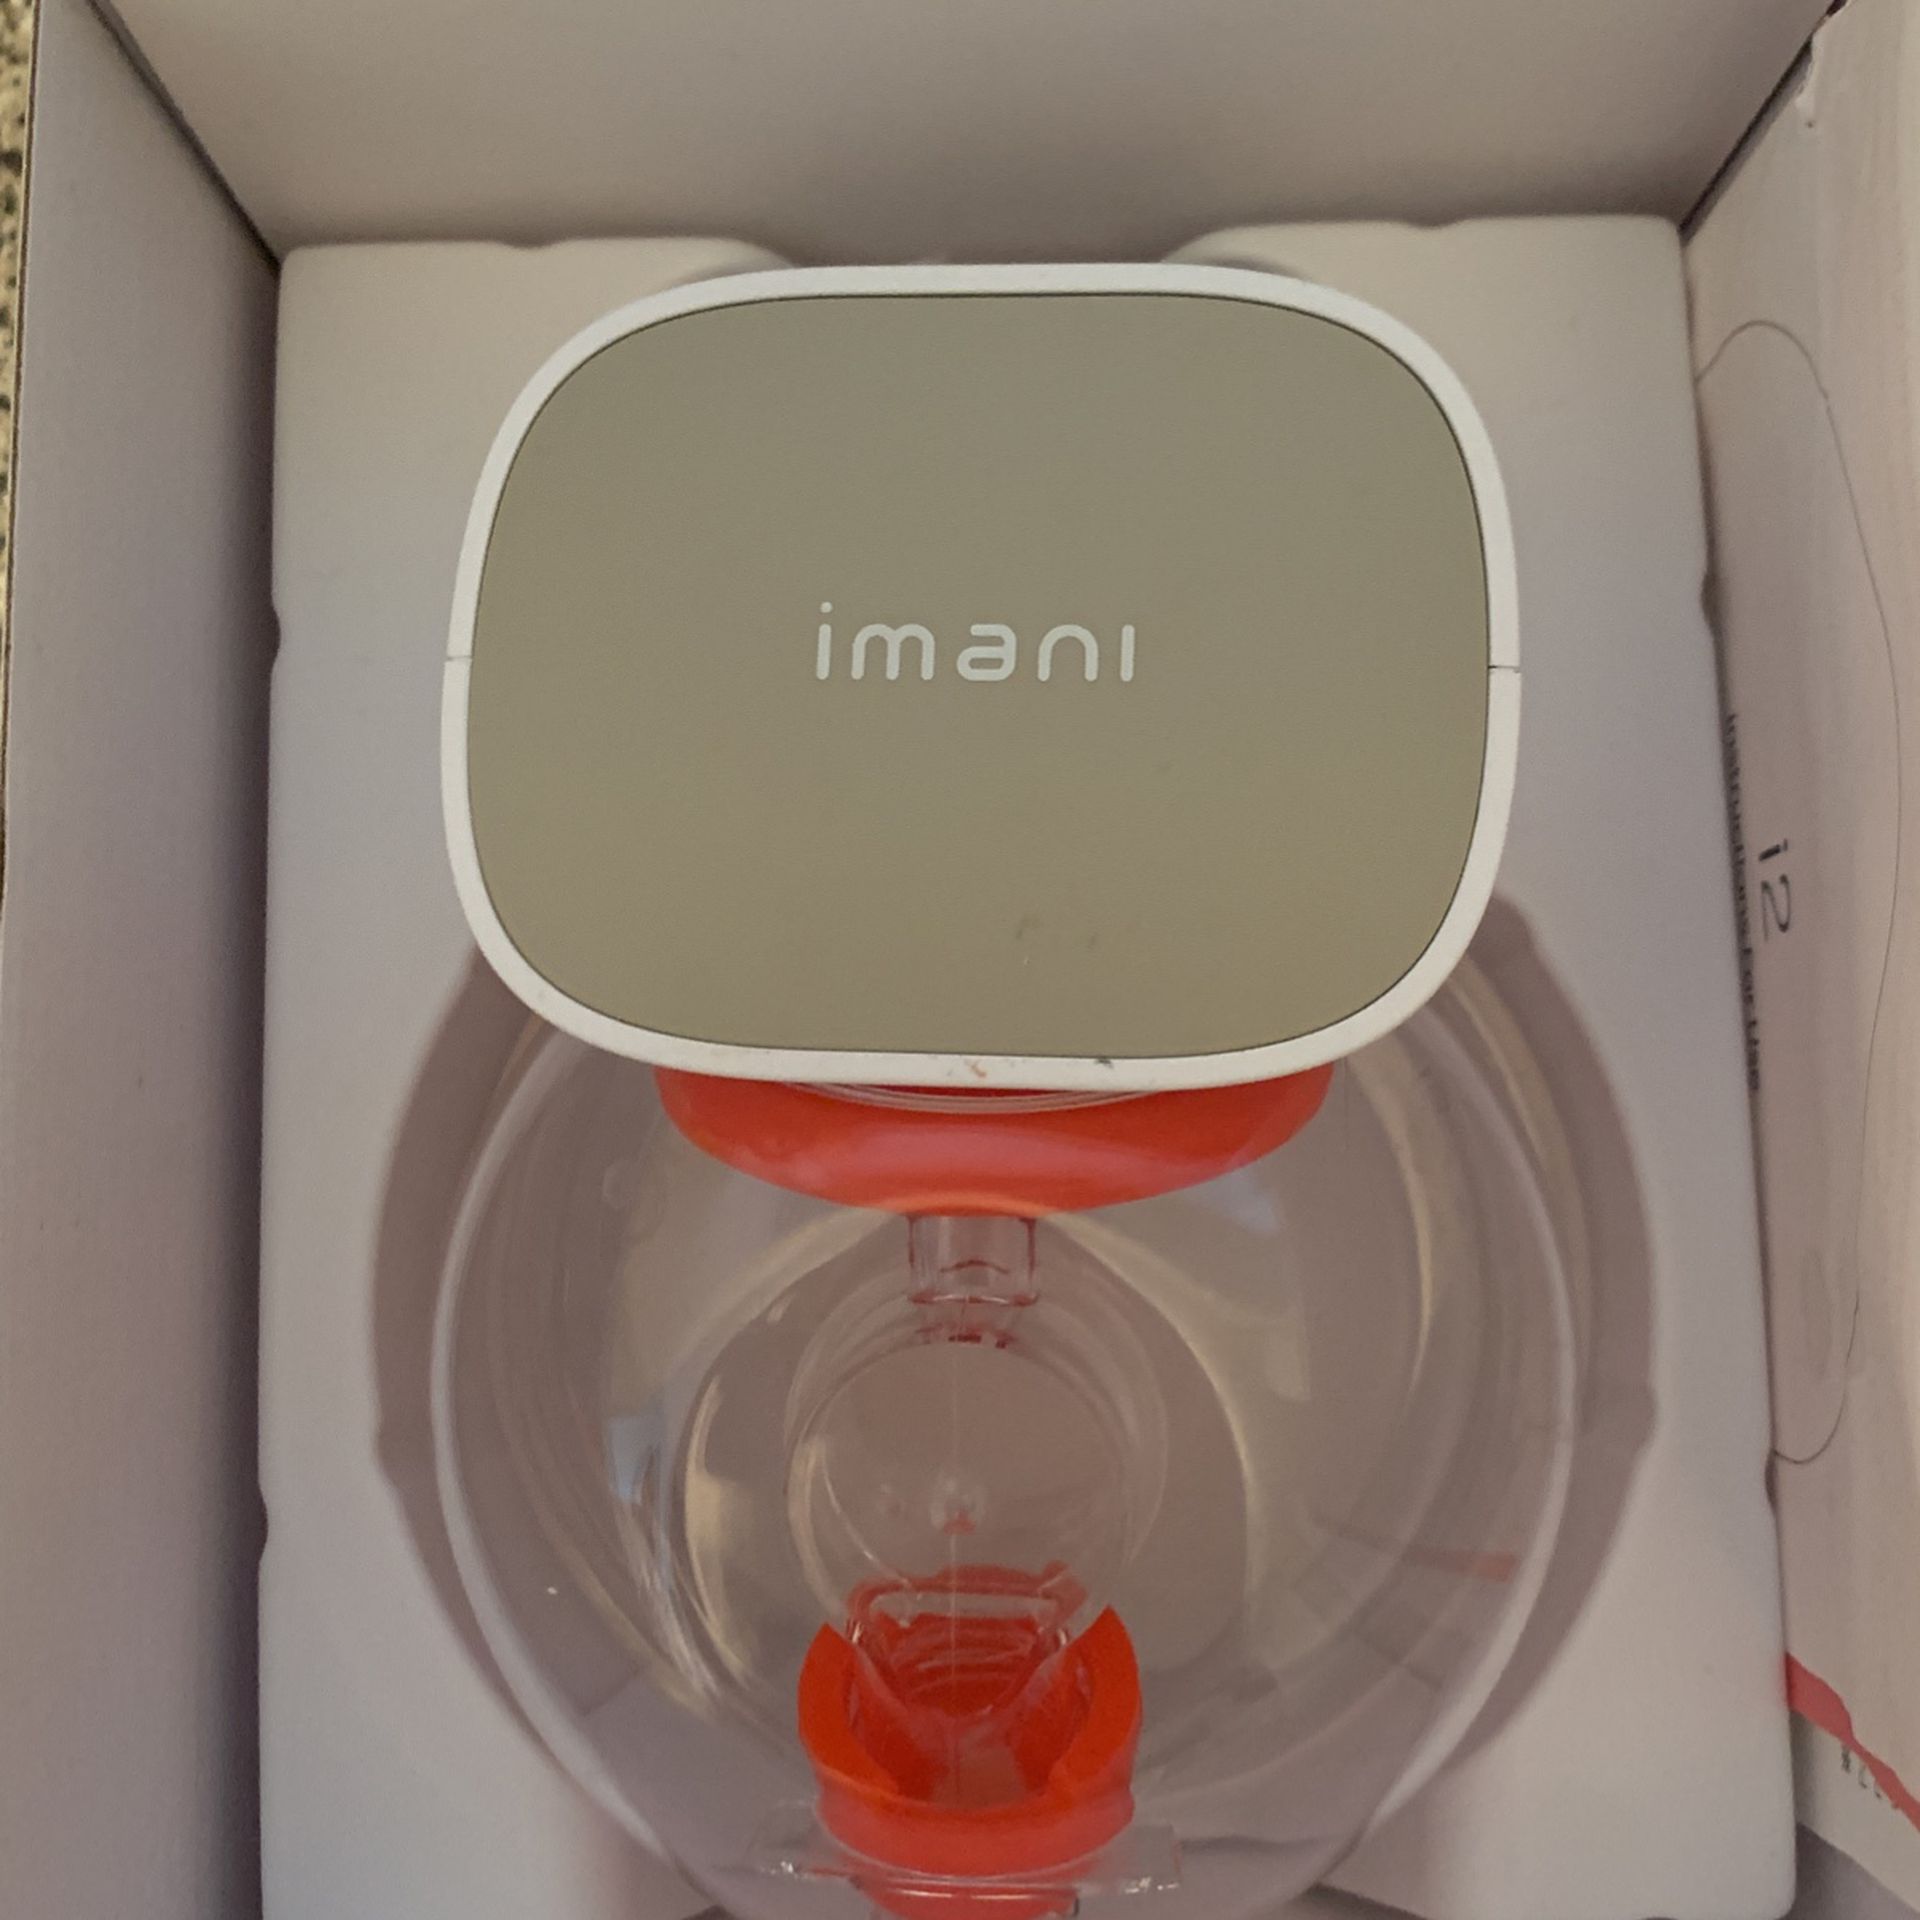 Wearable Breast Pump - Imani I2 | Legendairy Milk, Single / 19mm Inserts by Legendairy Milk